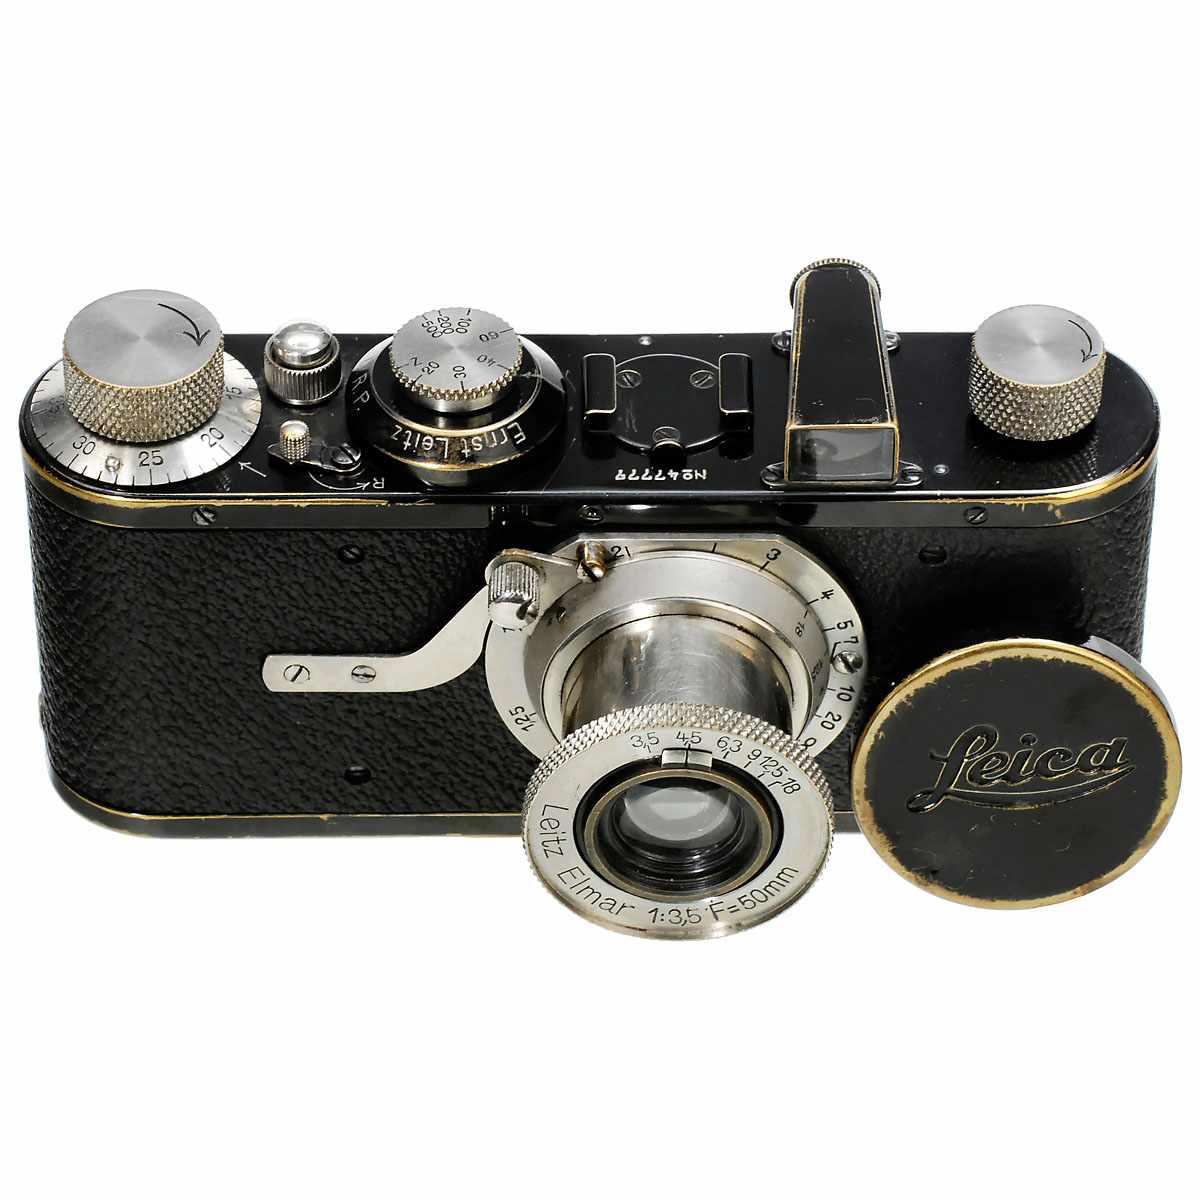 Leica I (A) mit Elmar 3,5, 1930 Leitz, Wetzlar. No. 47777, Elmar 3,5/50 mm, well-preserved